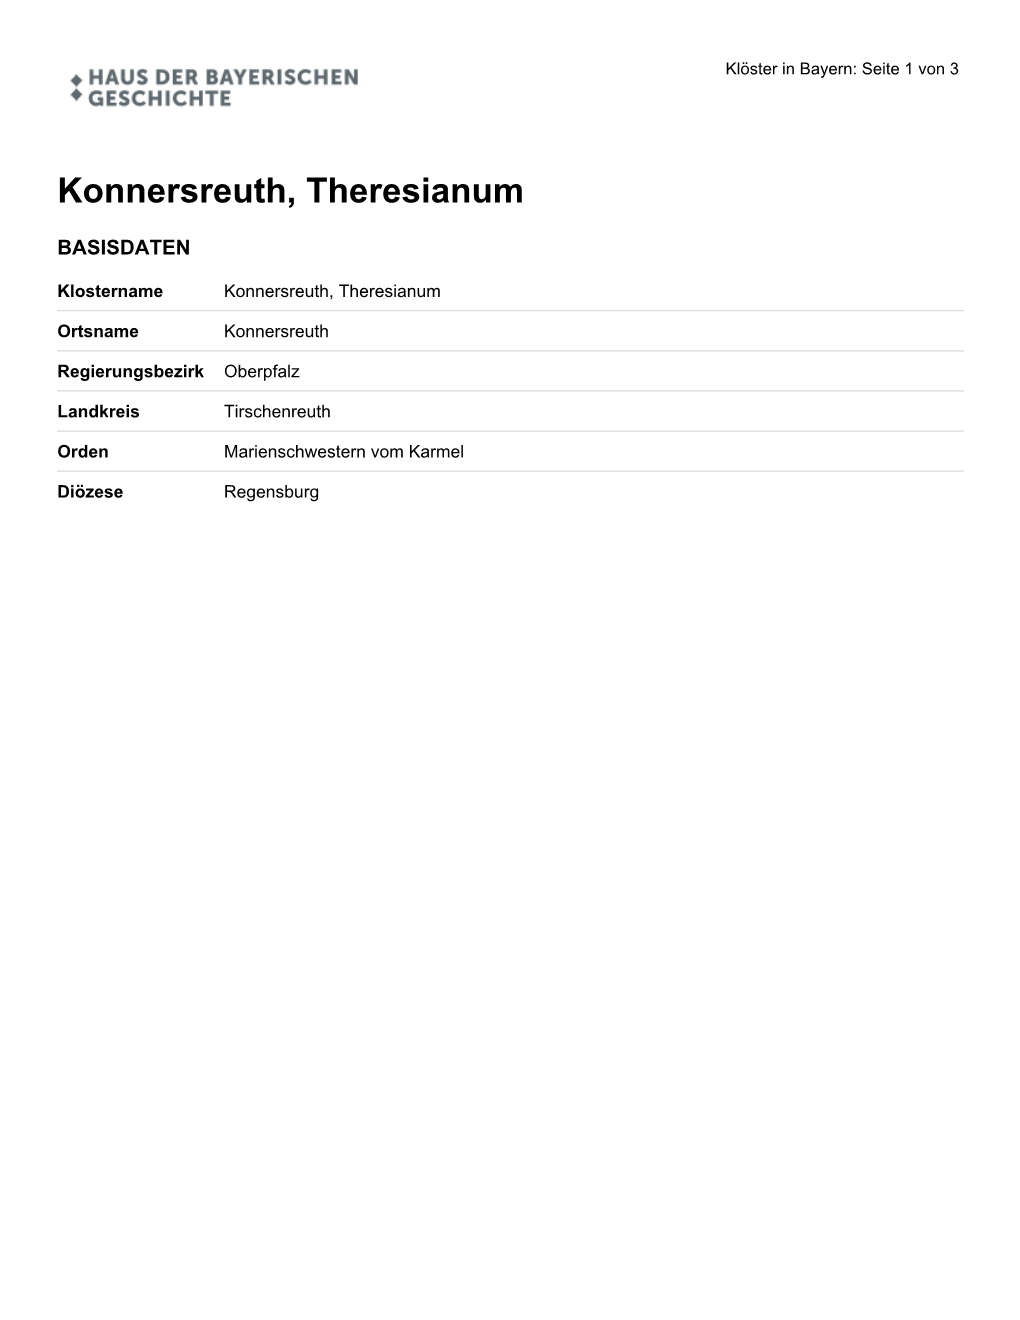 Konnersreuth, Theresianum